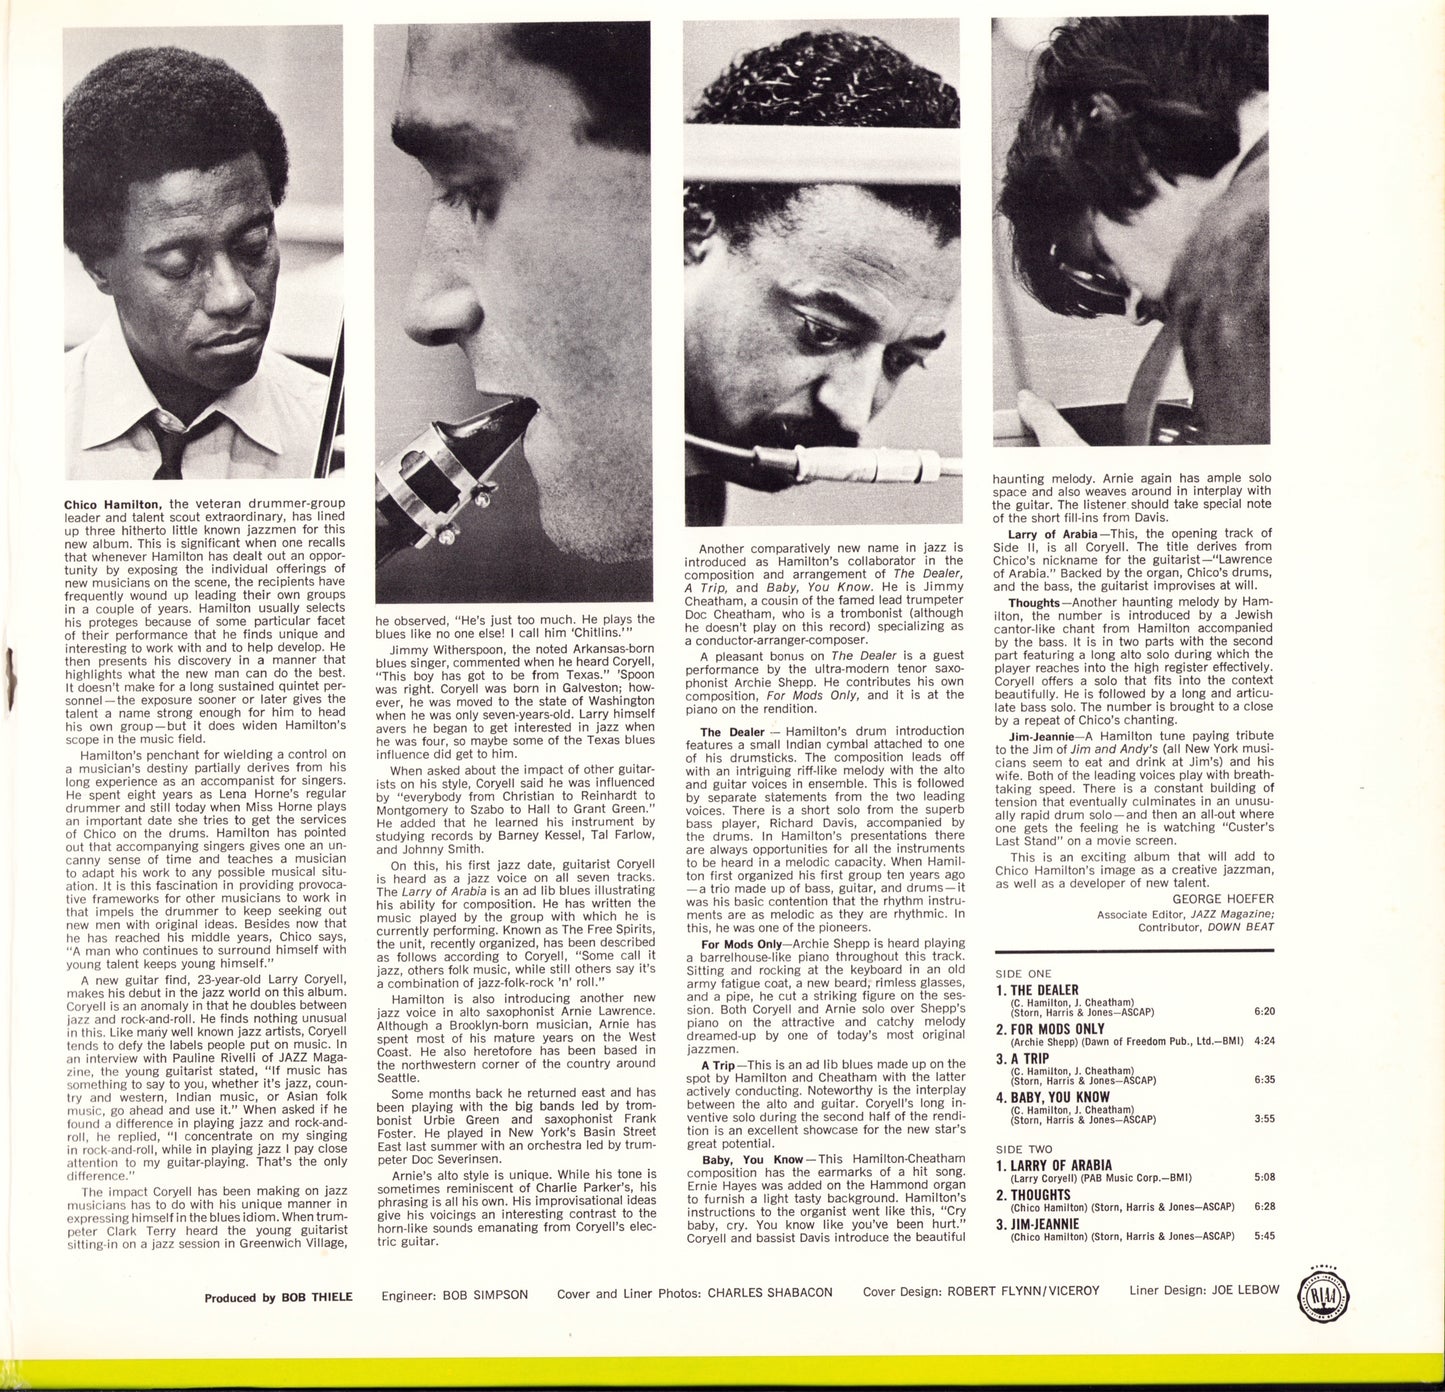 Chico Hamilton Introducing Larry Coryell - The Dealer Vinyl LP